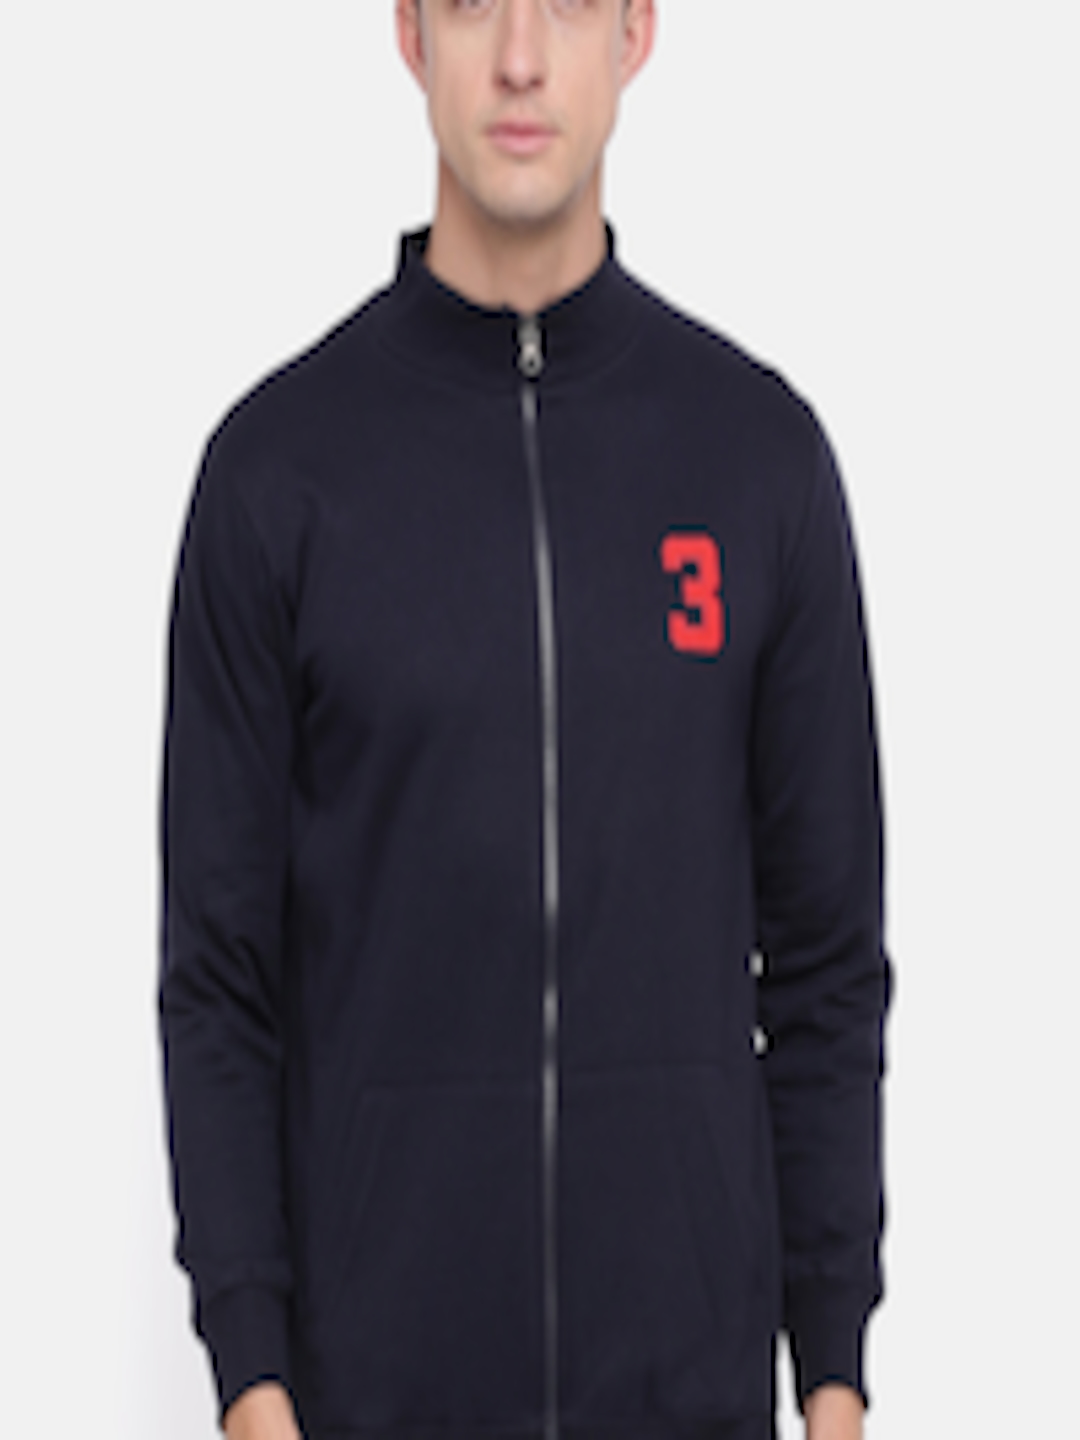 Buy ONN Men Navy Blue & Red Cotton Bomber Jacket - Jackets for Men ...